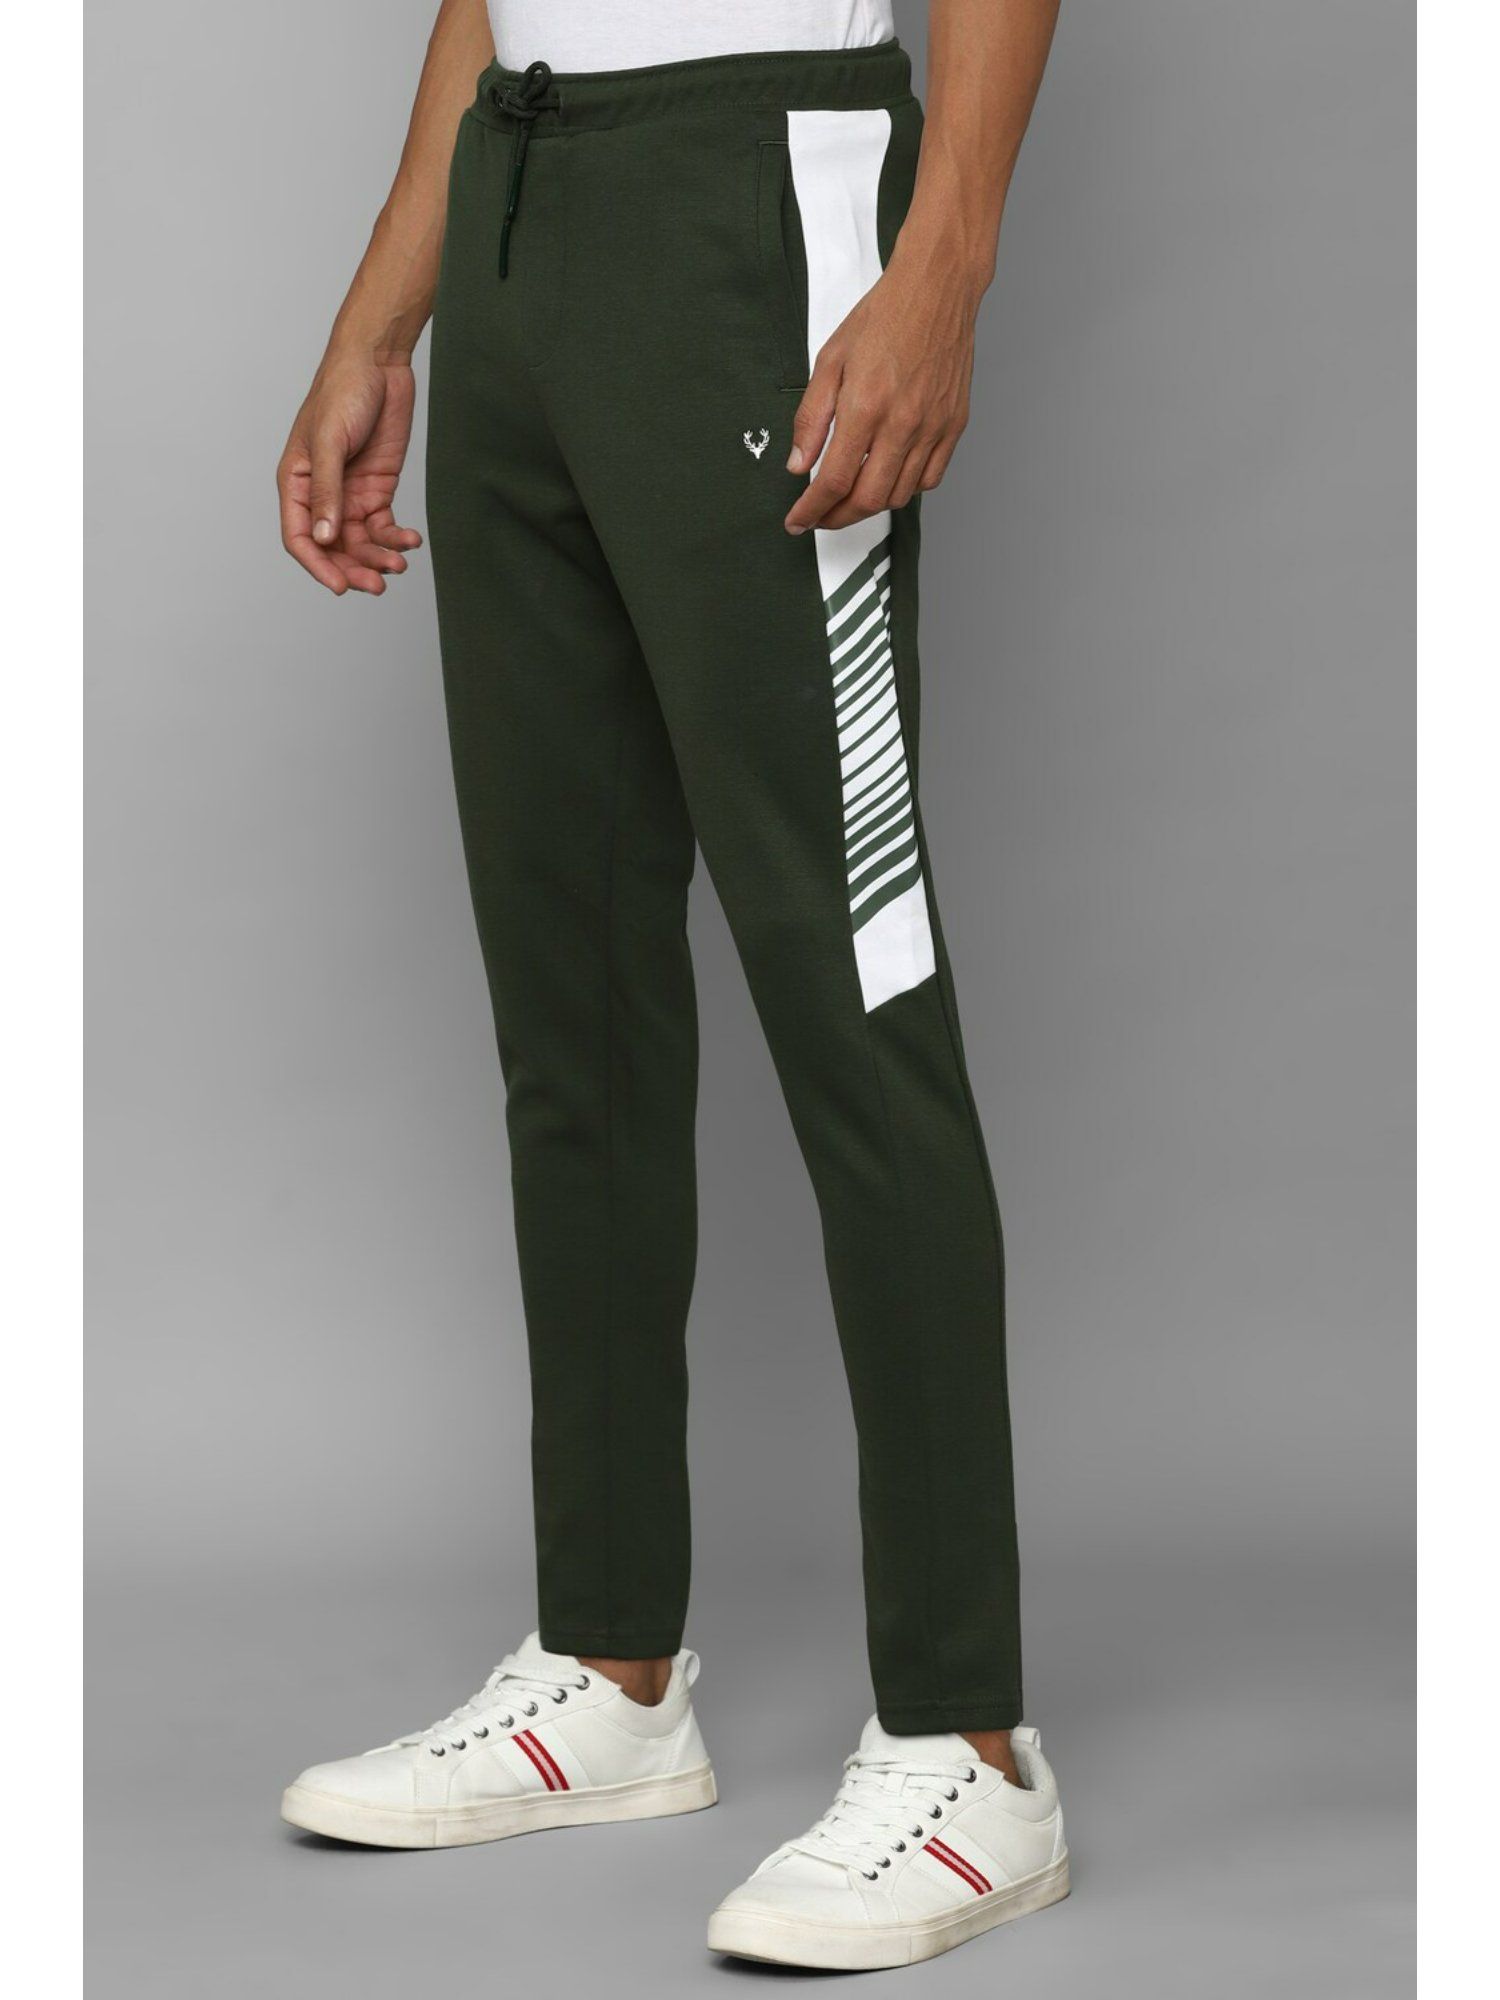 Allen Solly Women's Regular Track Pants (AHKBCRGPW20085- Teal_26),Size 26